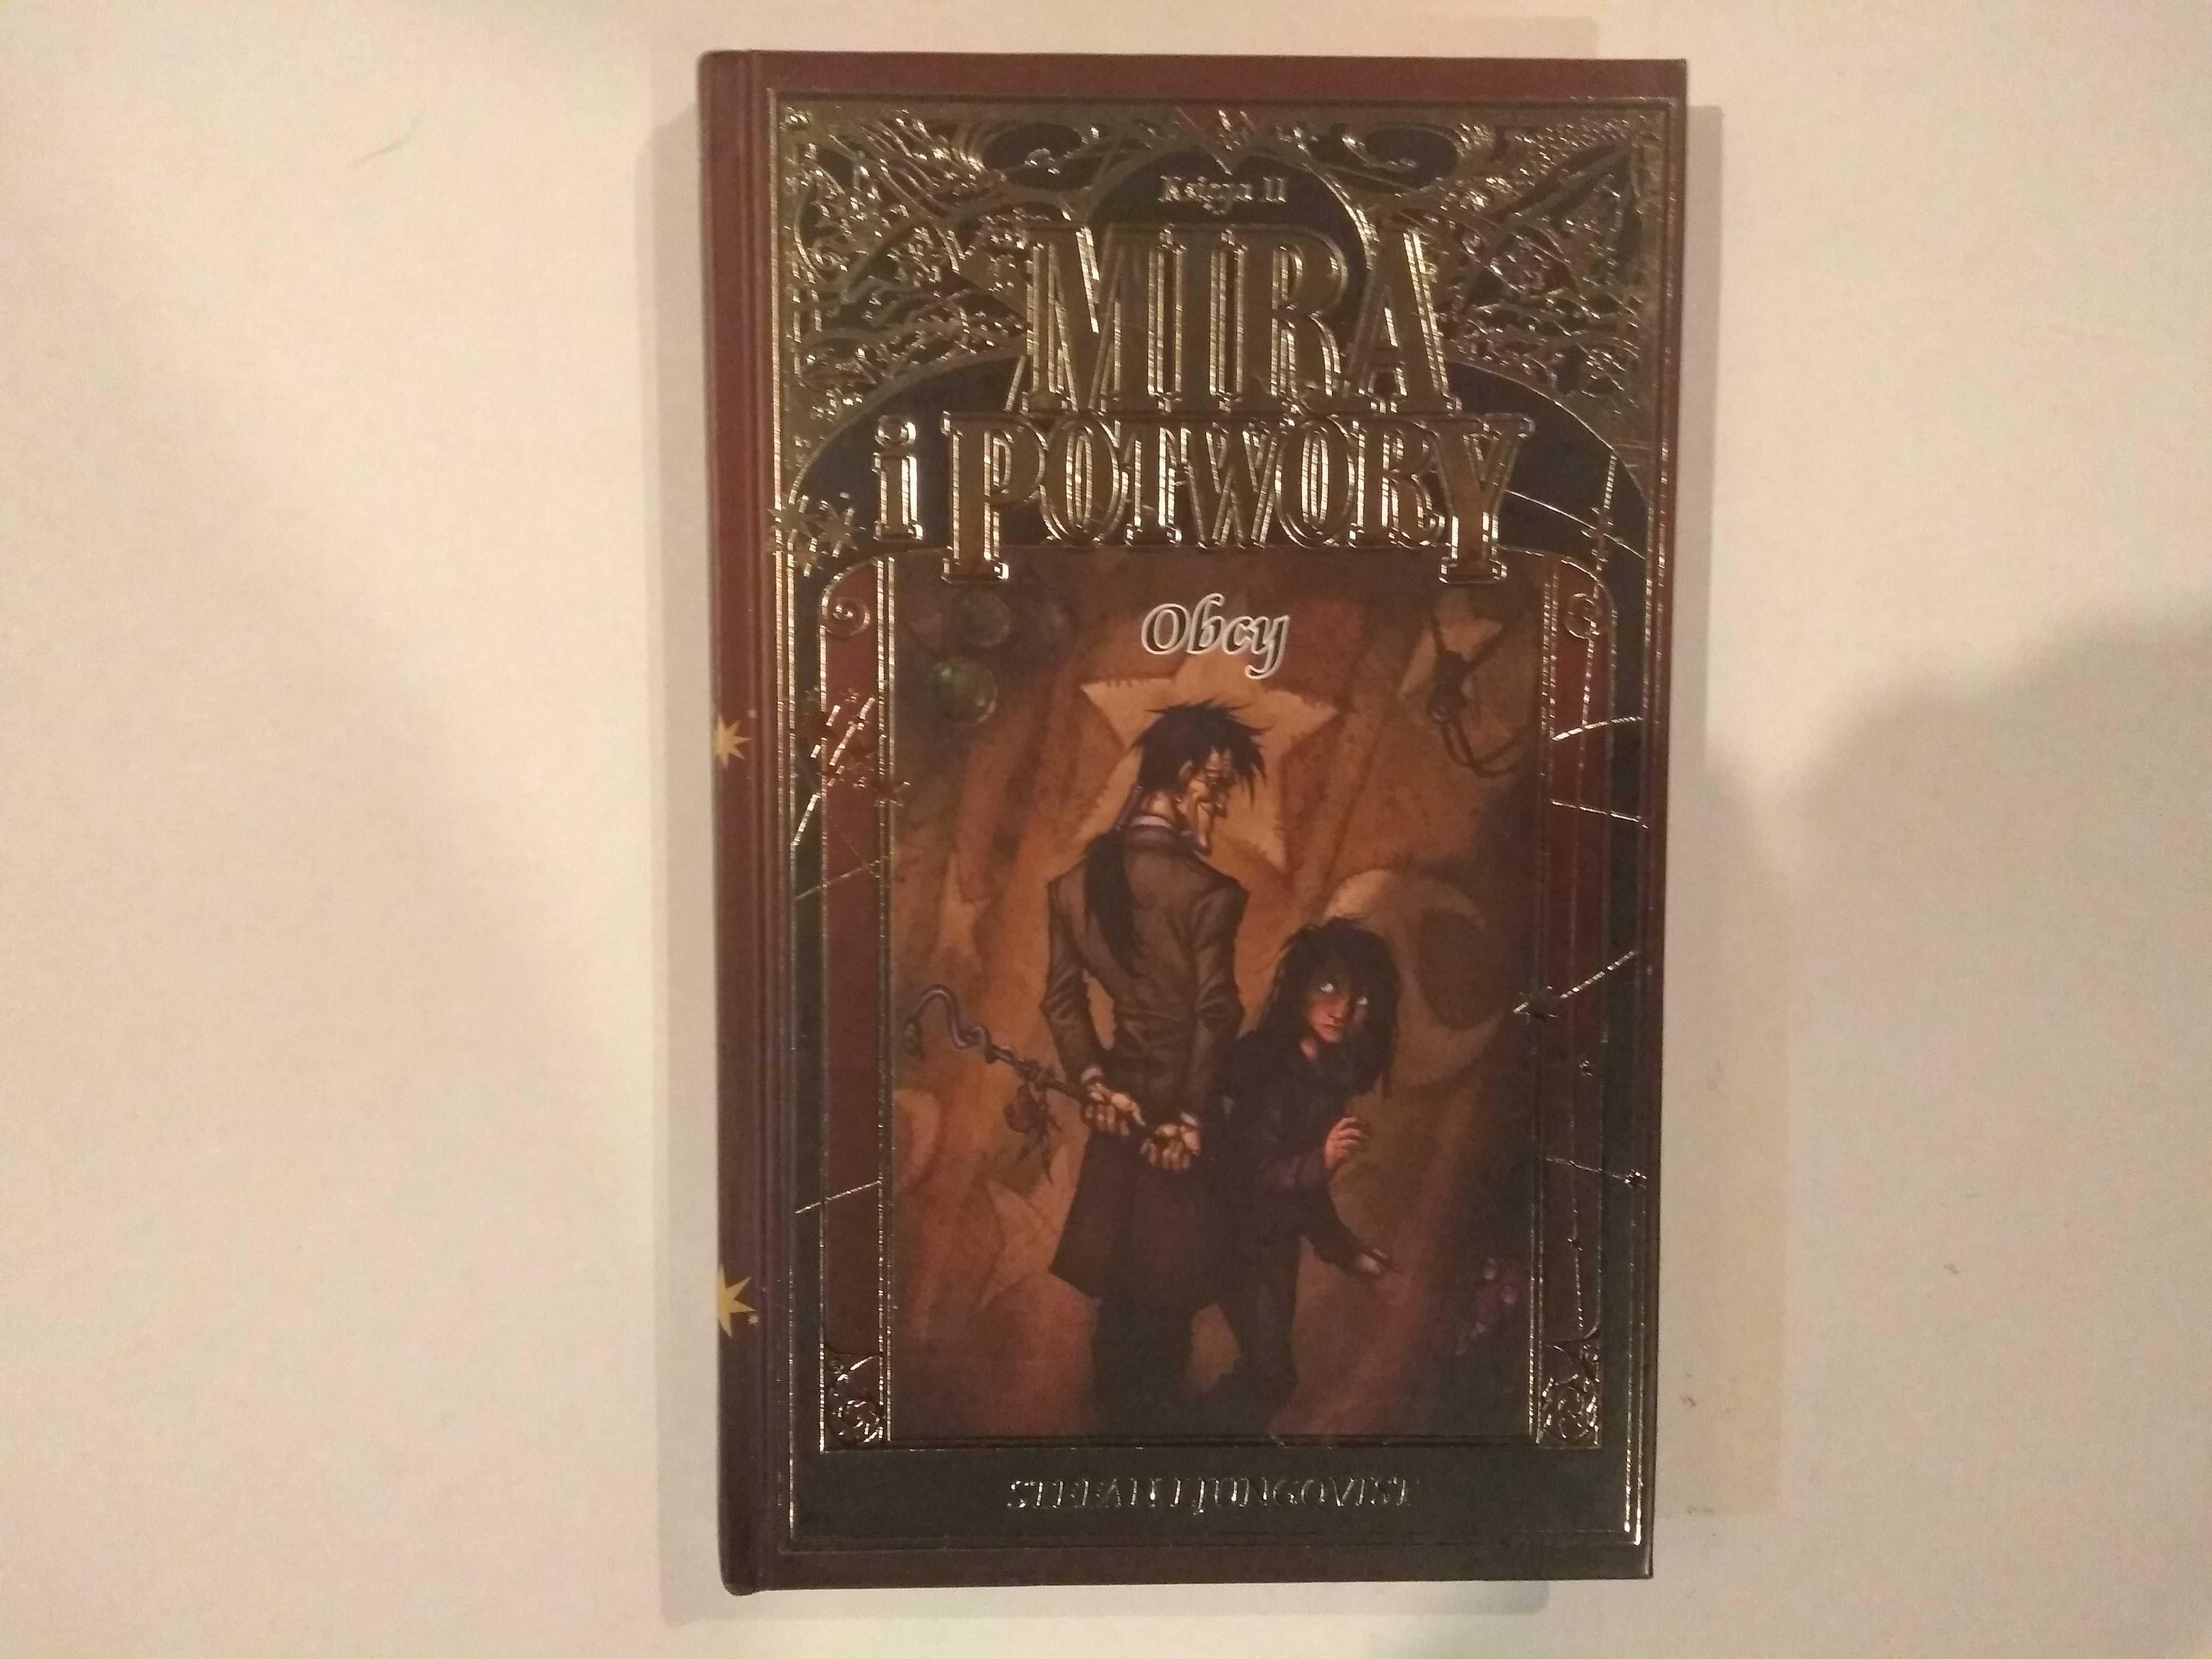 Dobra książka - Mira i potwory (2) Obcy (D6)